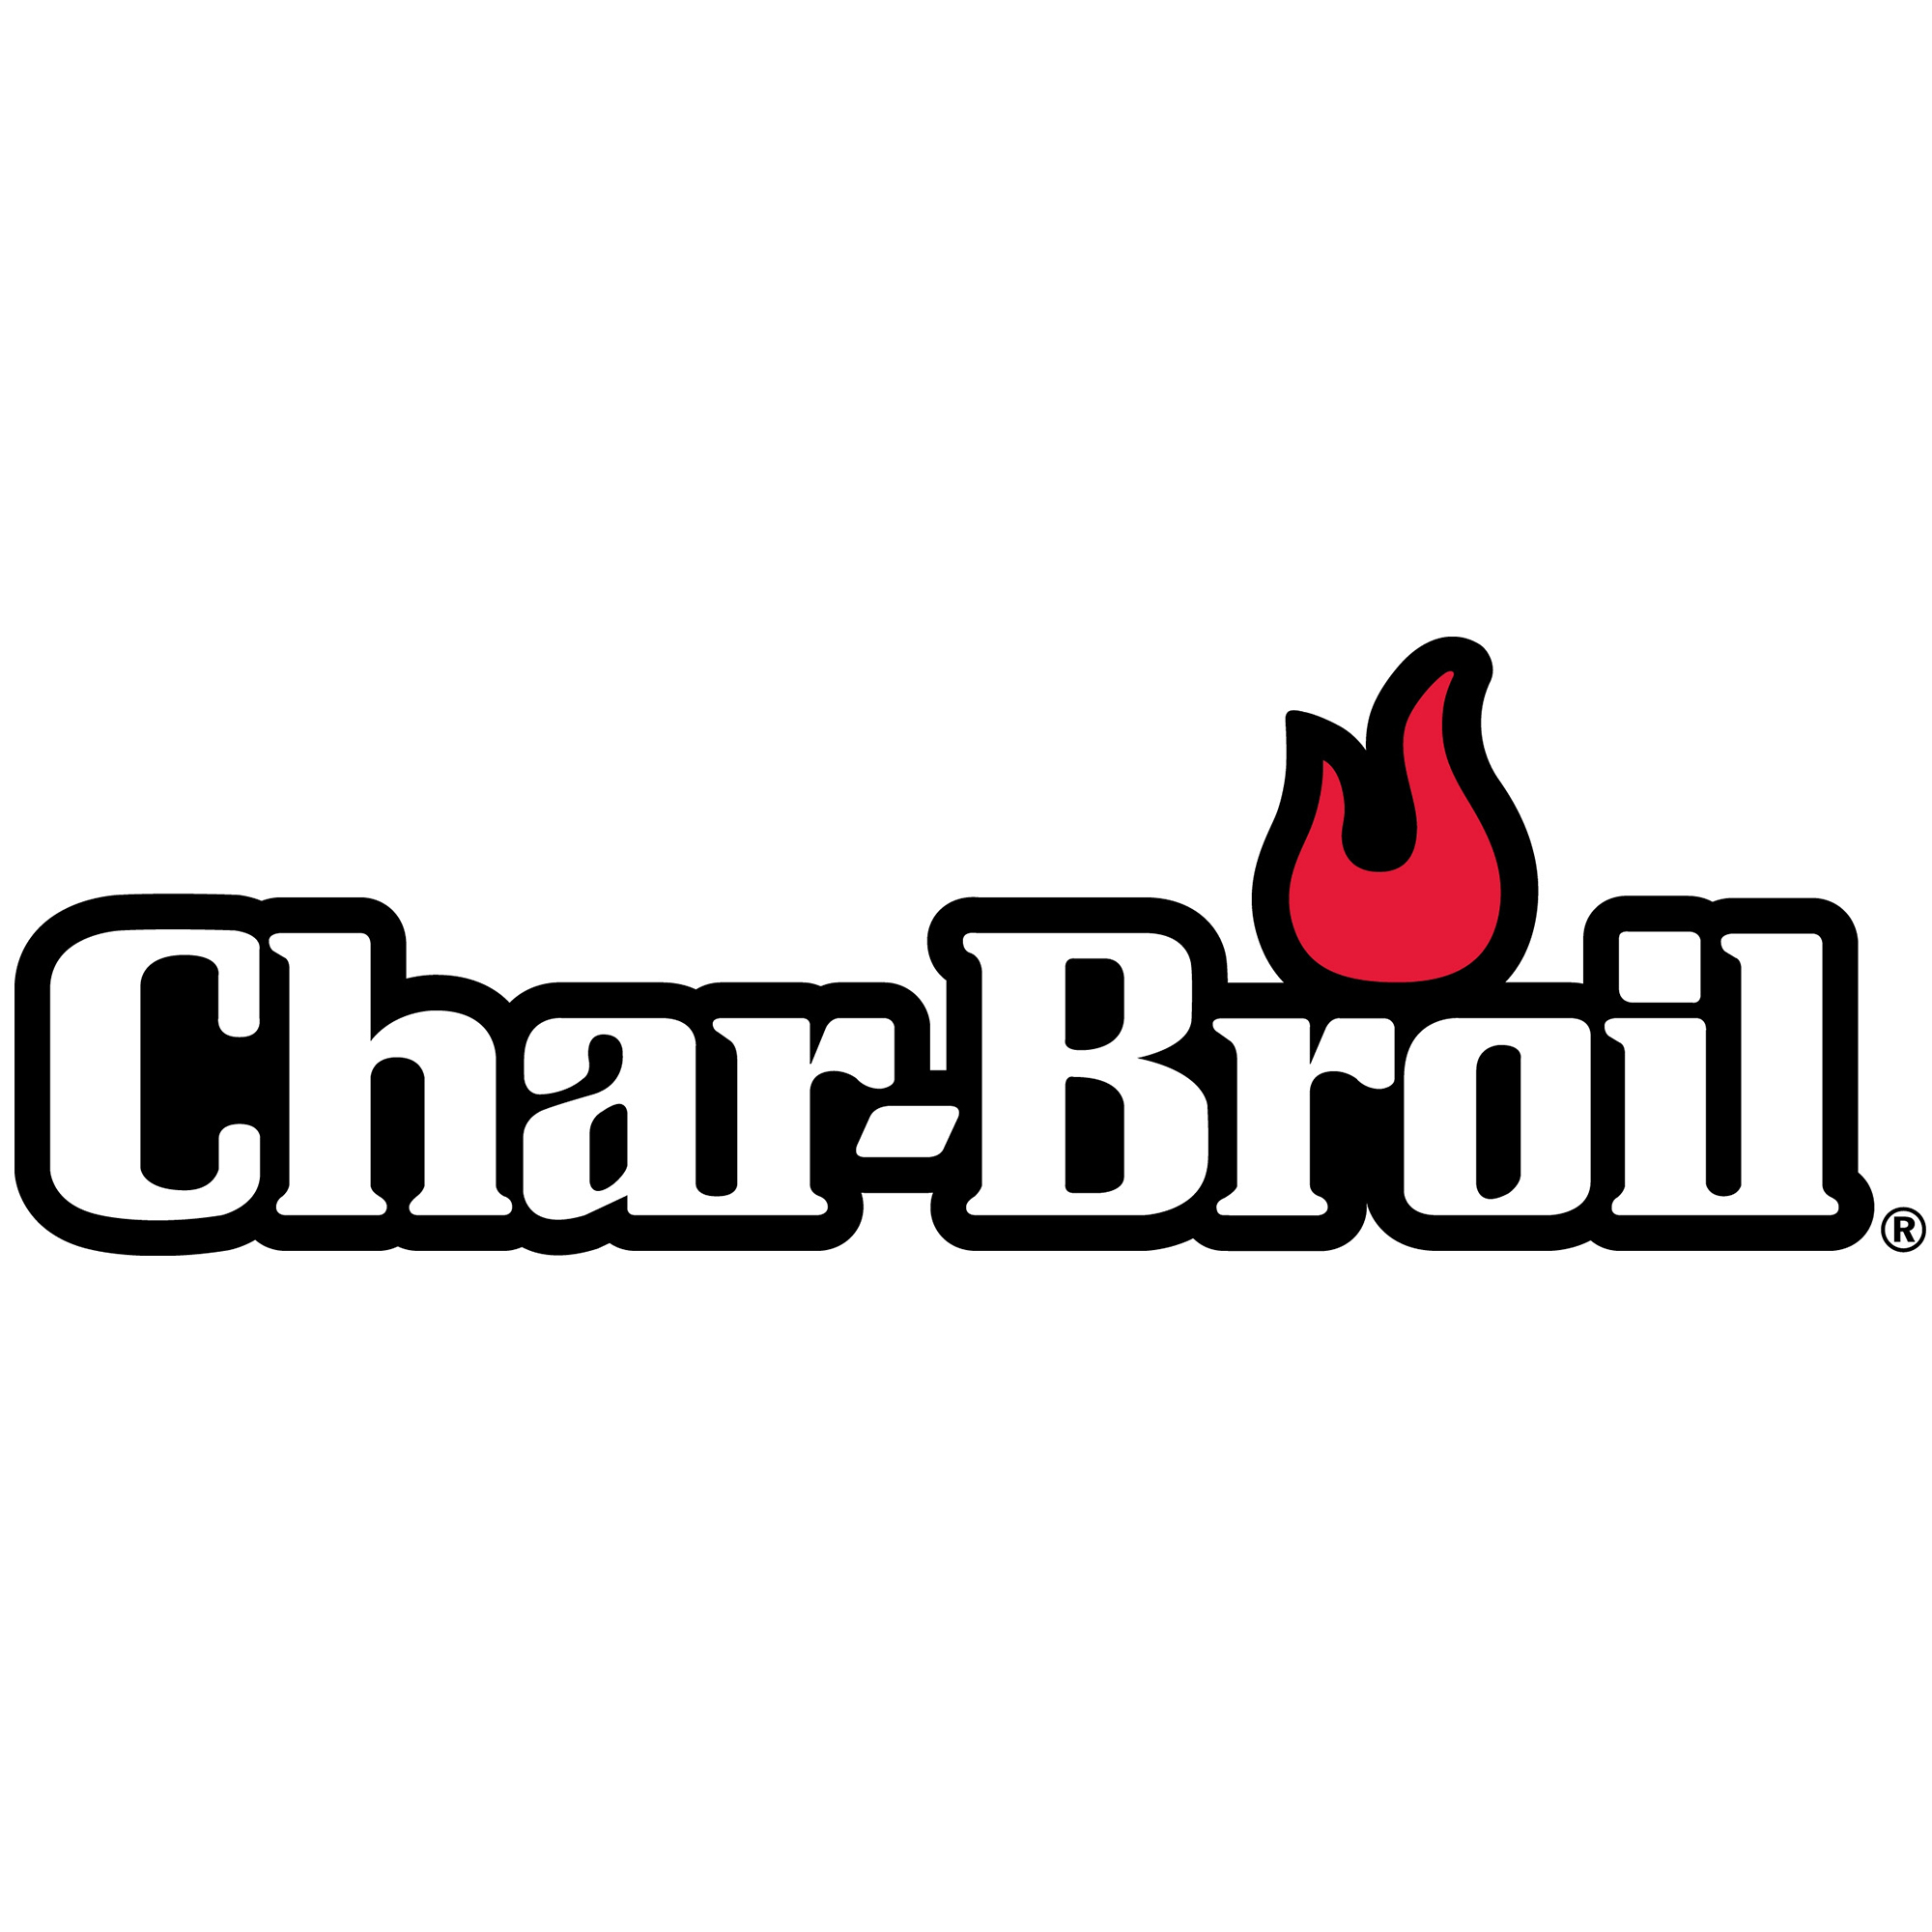 Char-Broil G530-B700-W1 Gas Grill Cooking Grate Genuine Original Equipment Manufacturer (OEM) Part